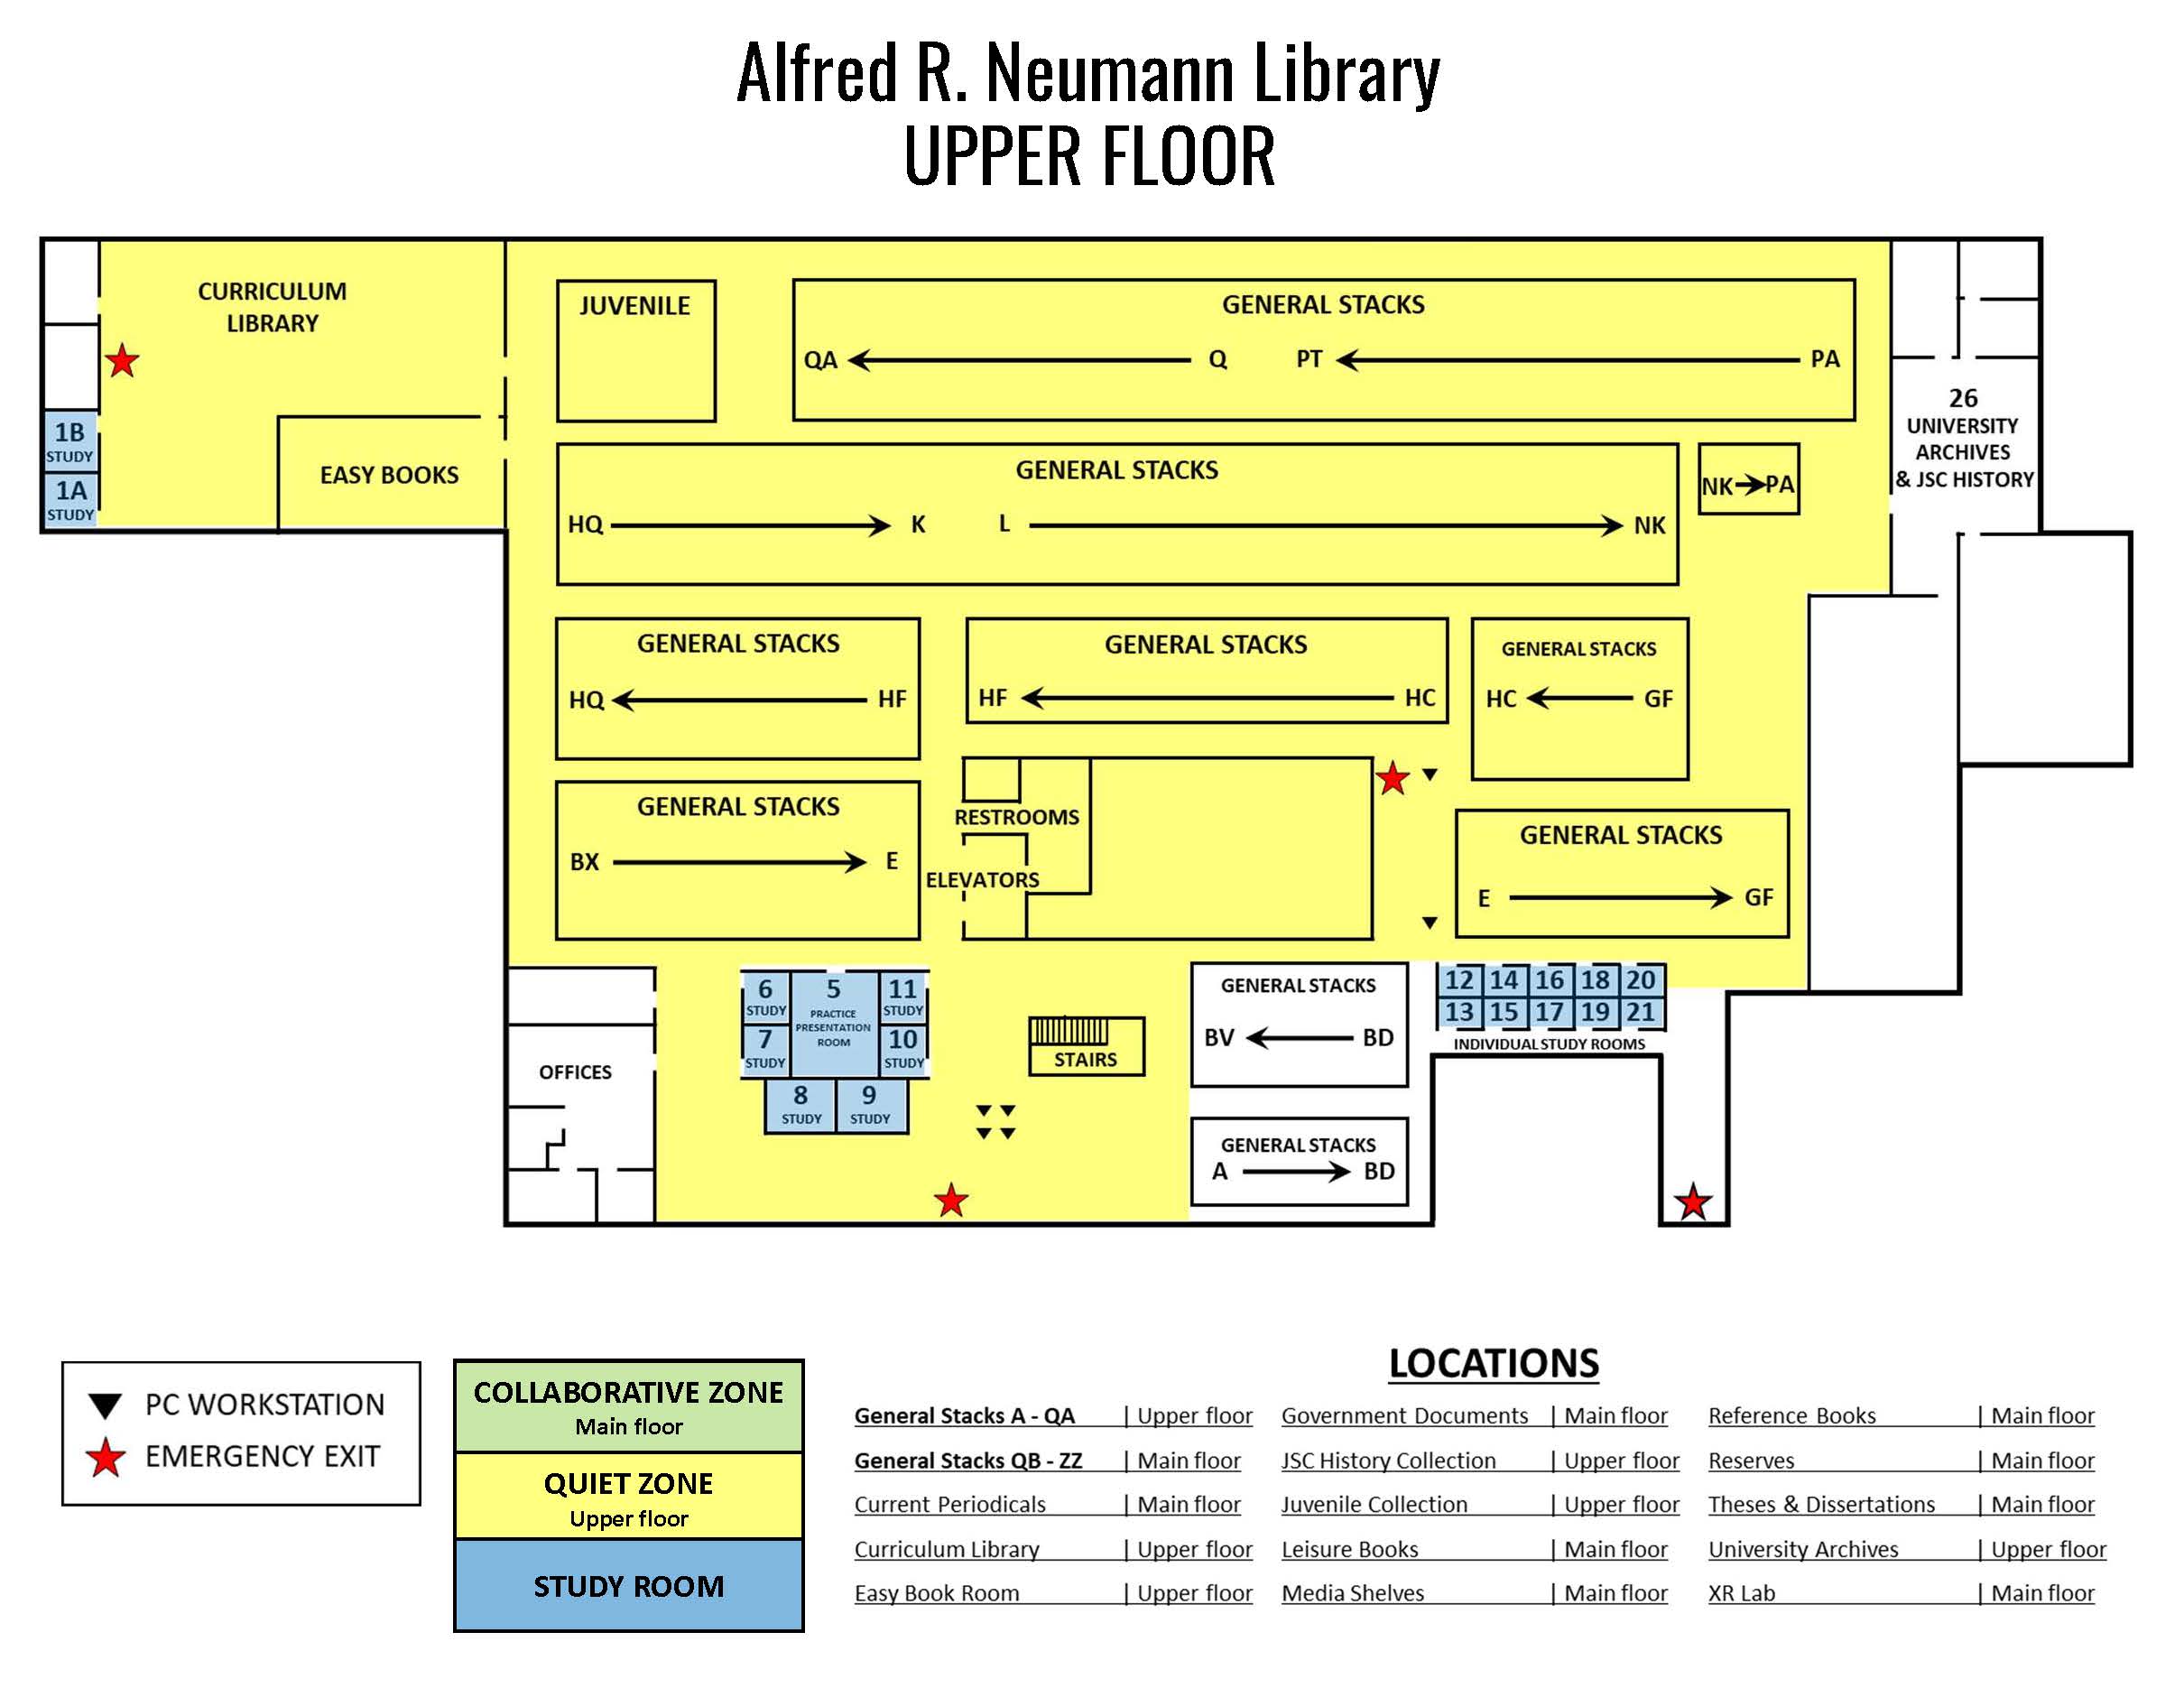 Alfred R. Neumann Library Upper Floor Map